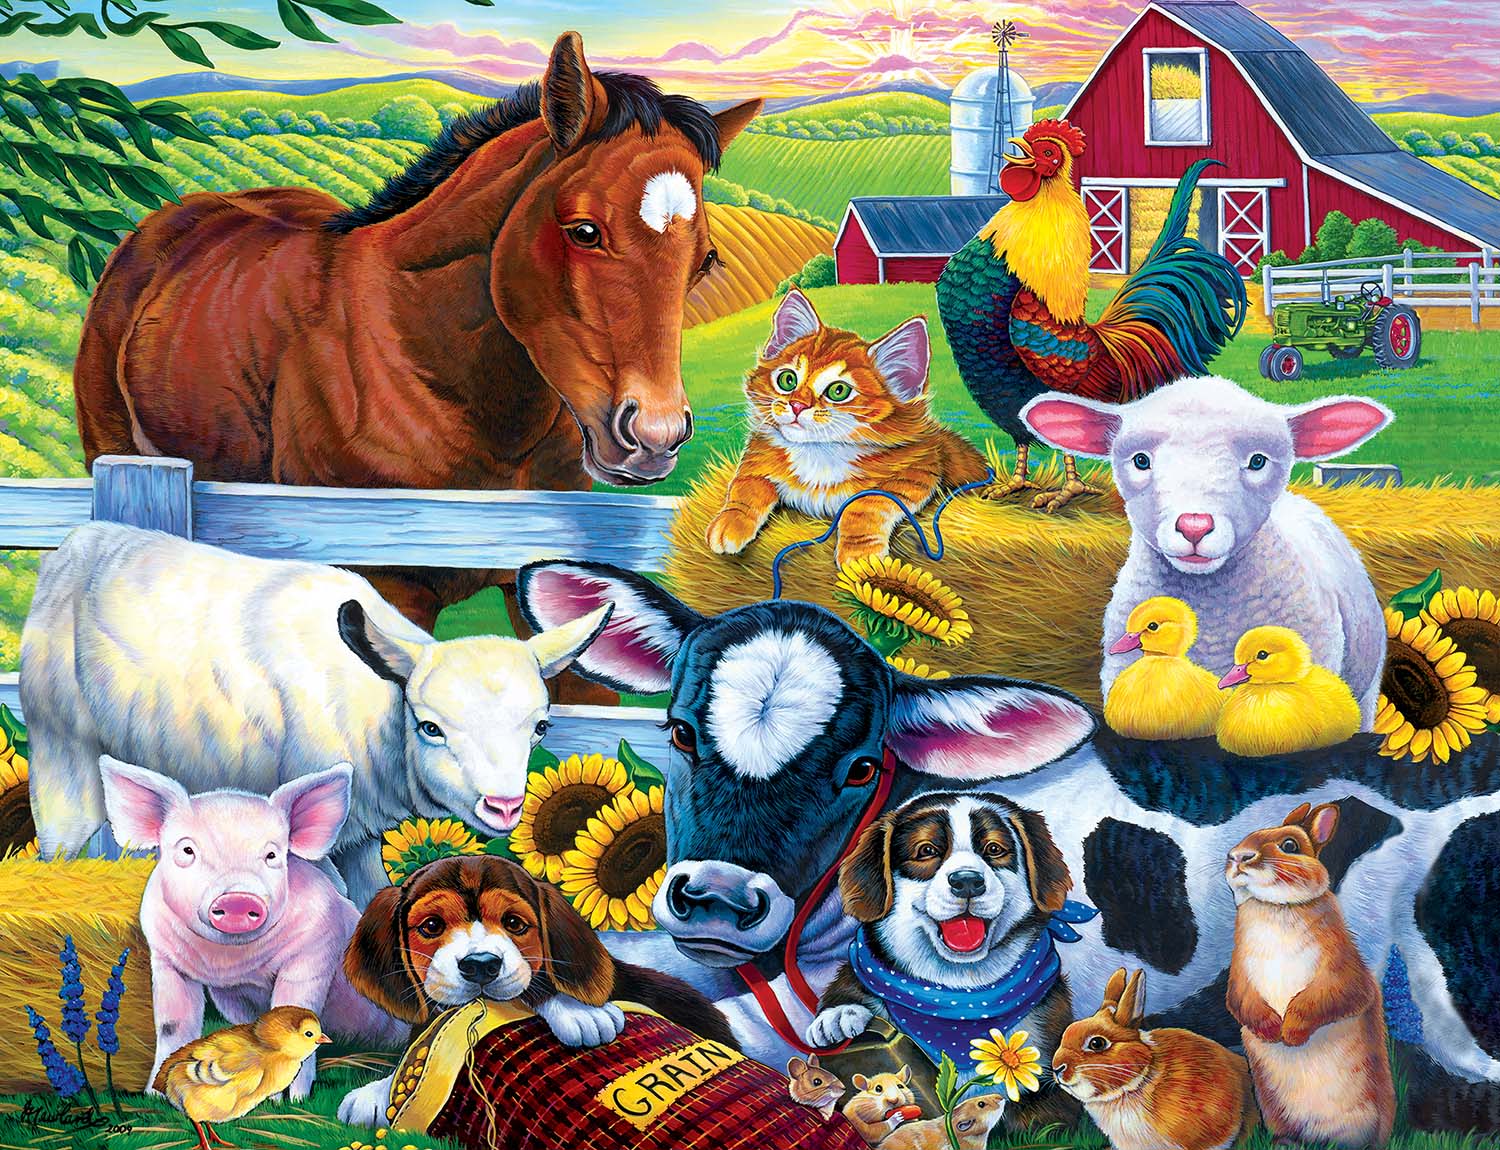 World of Animals - Farm Friends Farm Animal Jigsaw Puzzle